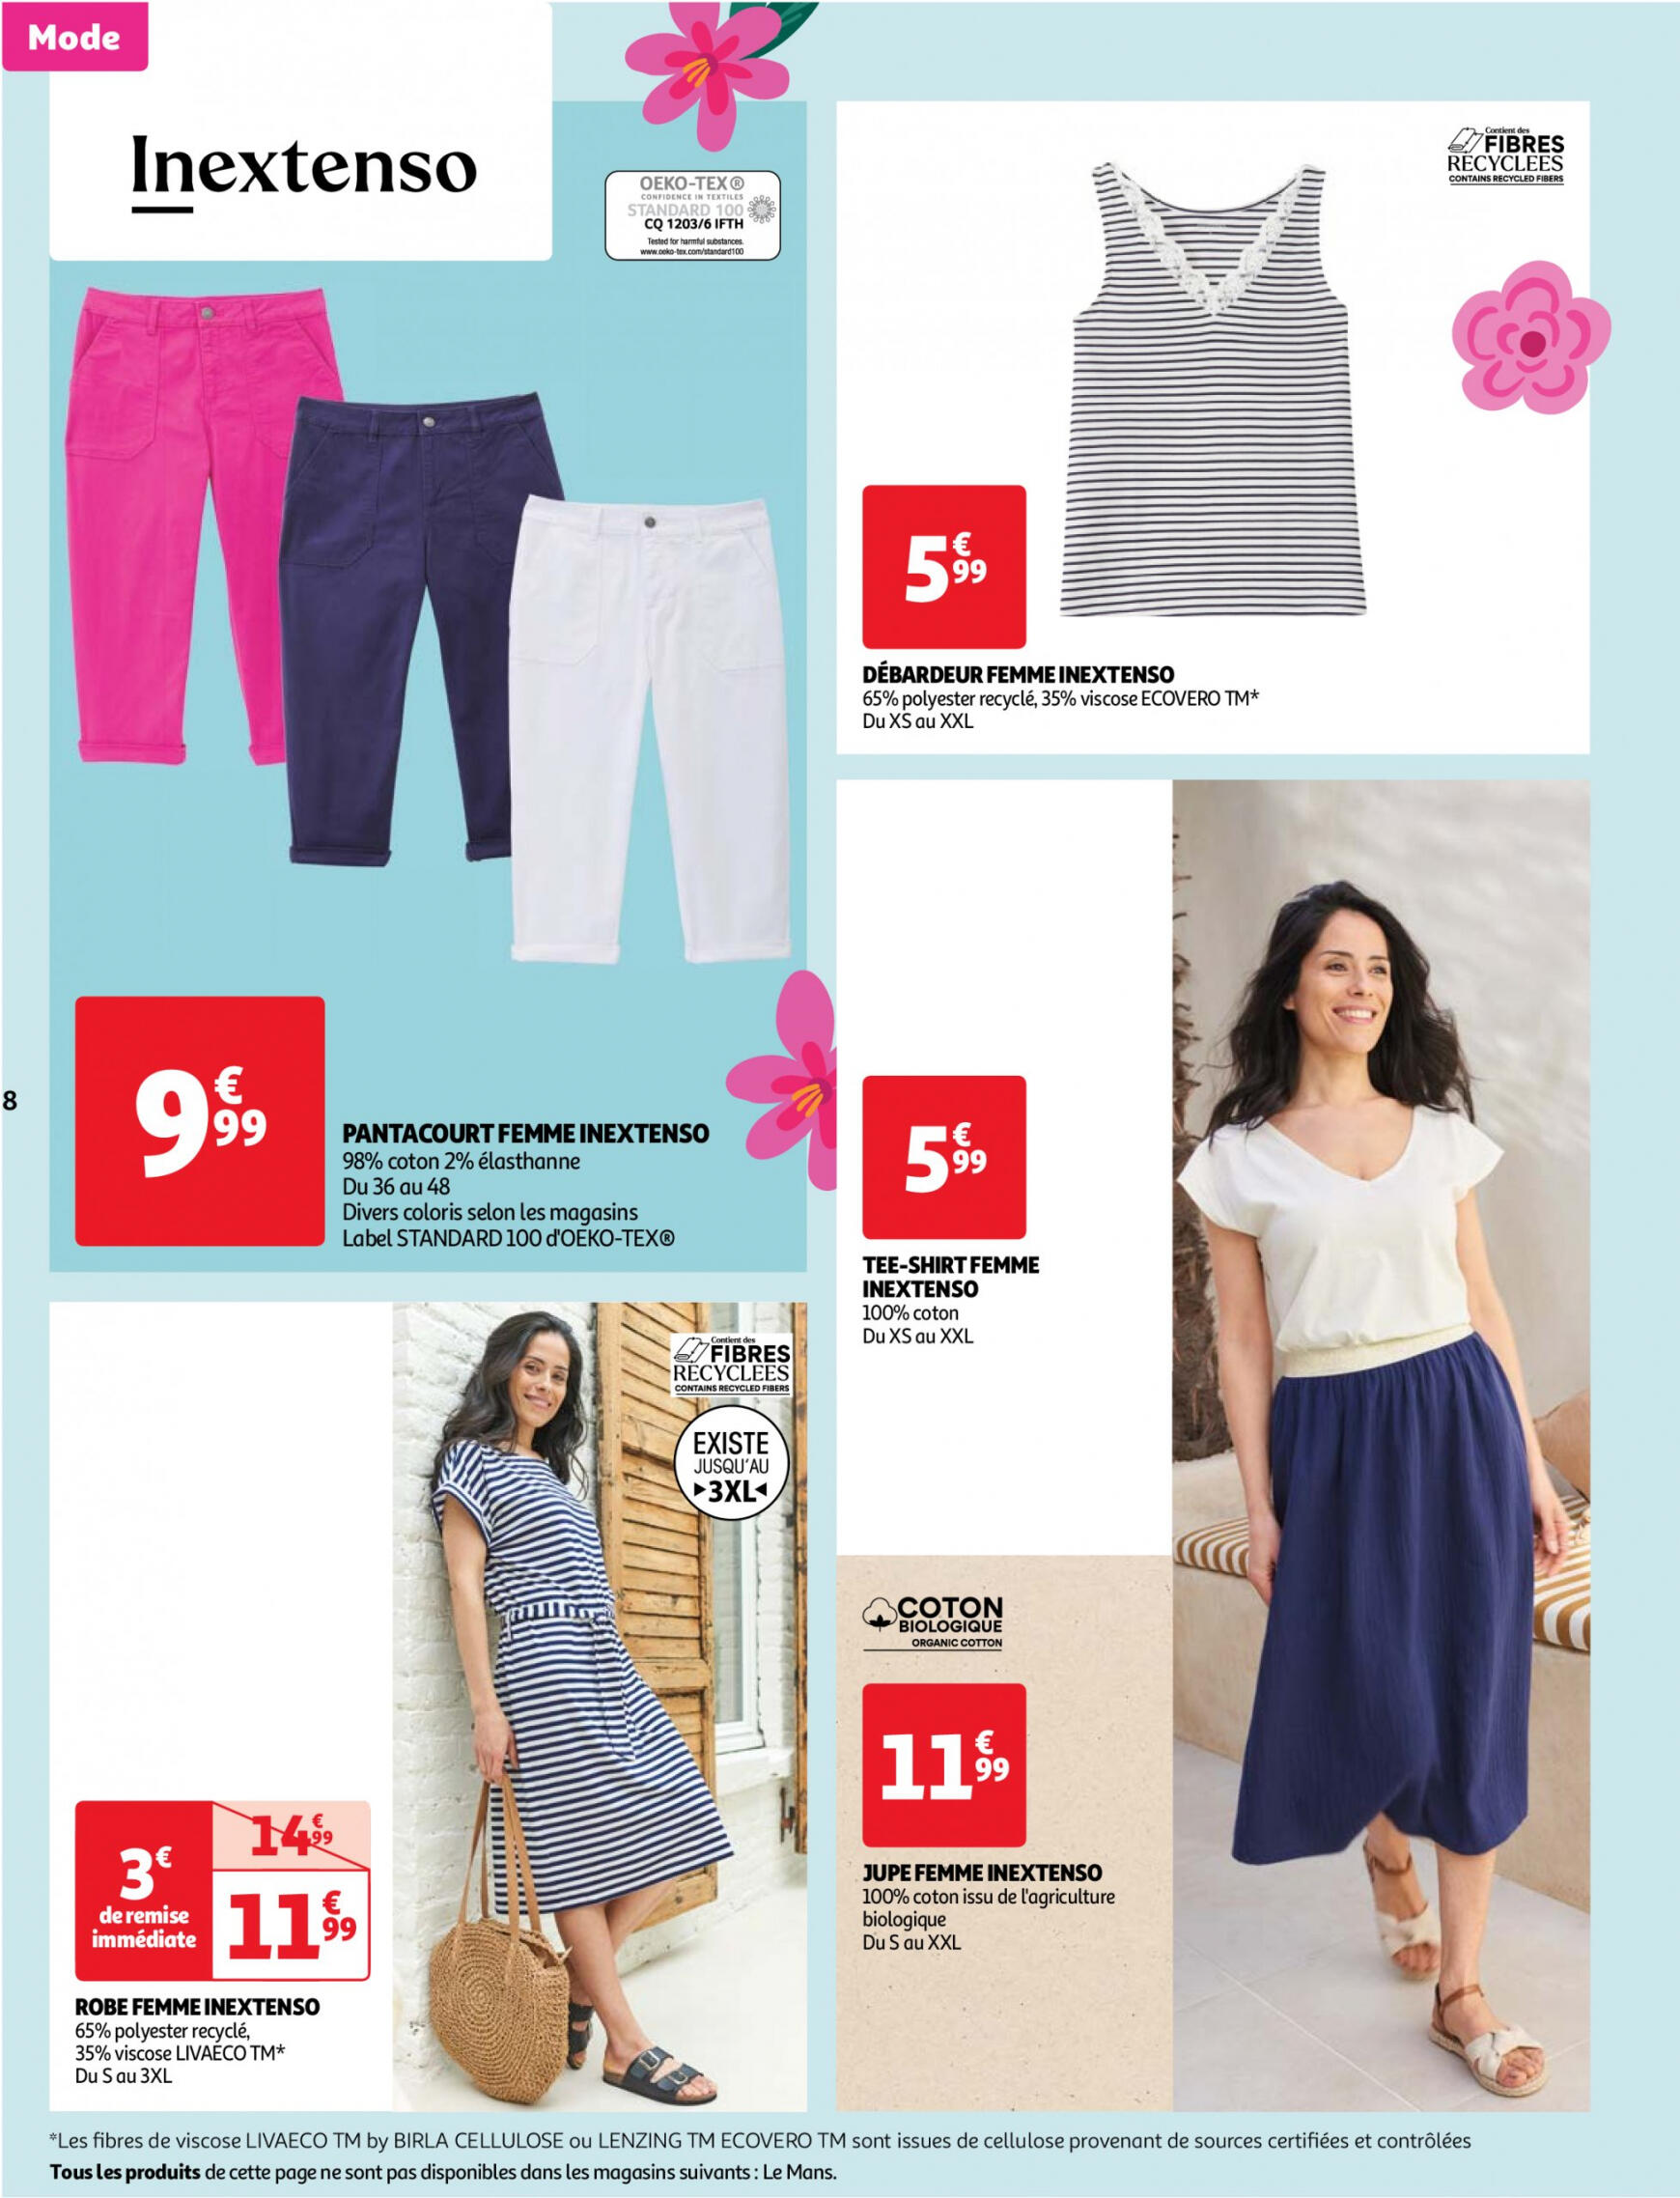 auchan - Auchan - Merci maman folder huidig 14.05. - 26.05. - page: 8